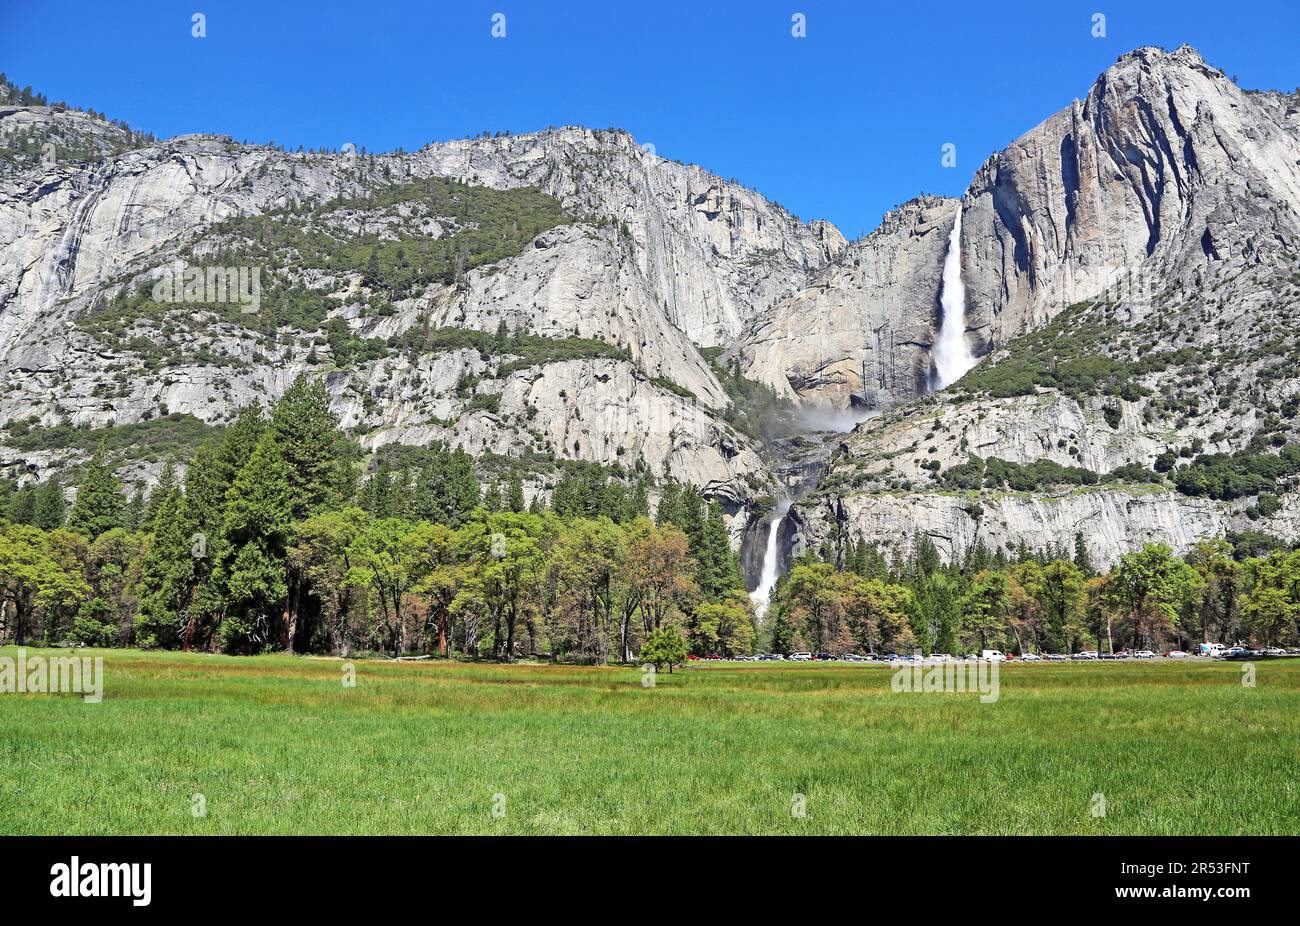 On Cook's meadow - Yosemite NP, California Stock Photo